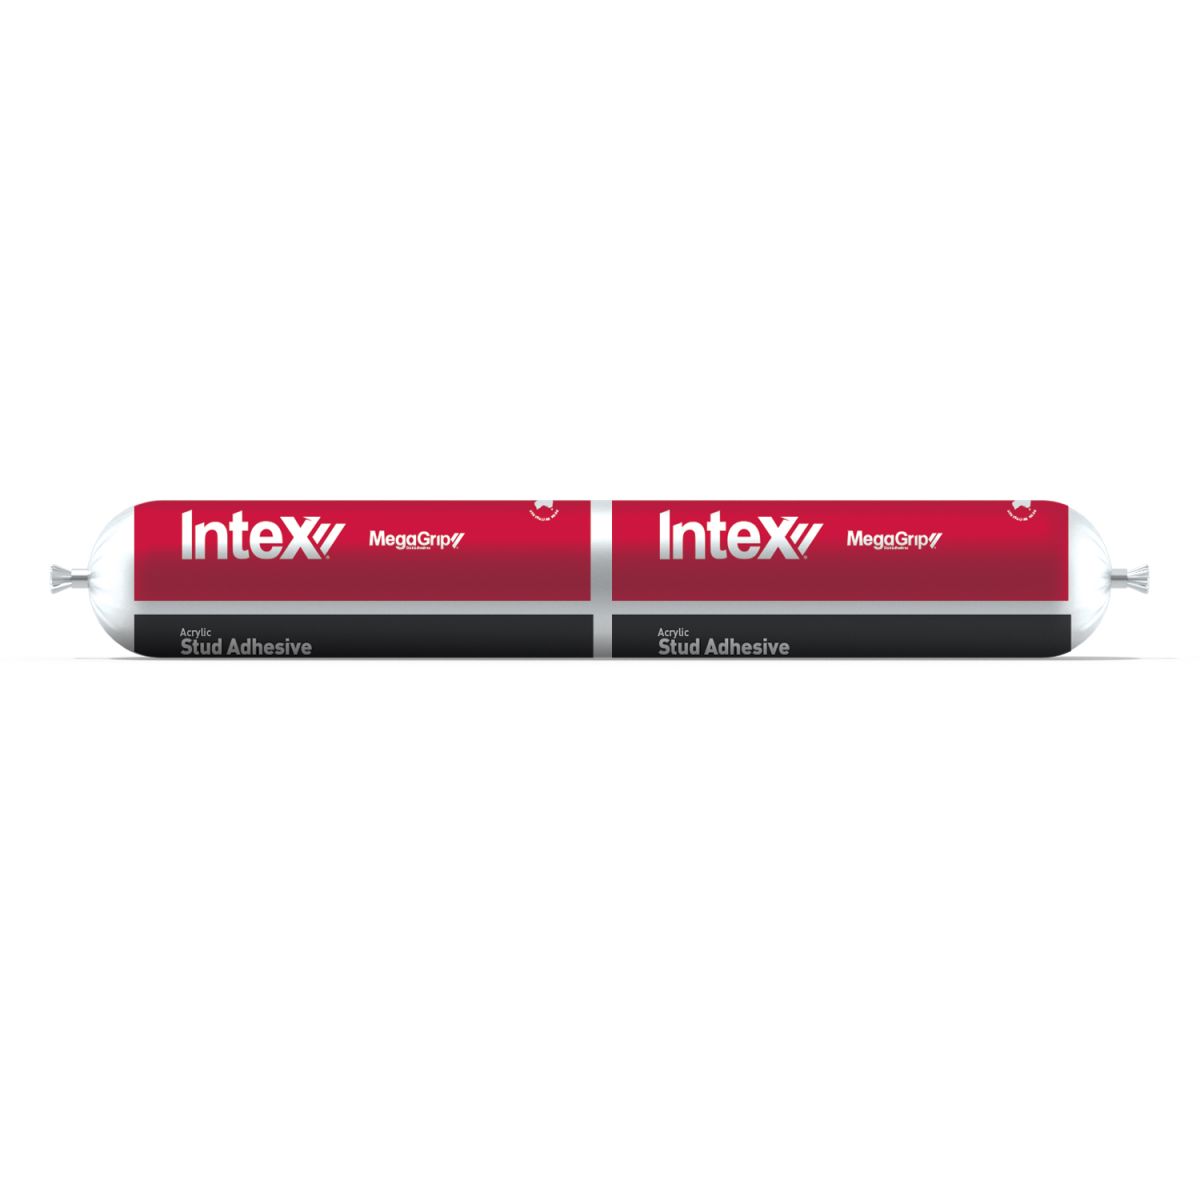 Intex MegaGrip Acrylic Stud Adhesive Sausage x 850g
